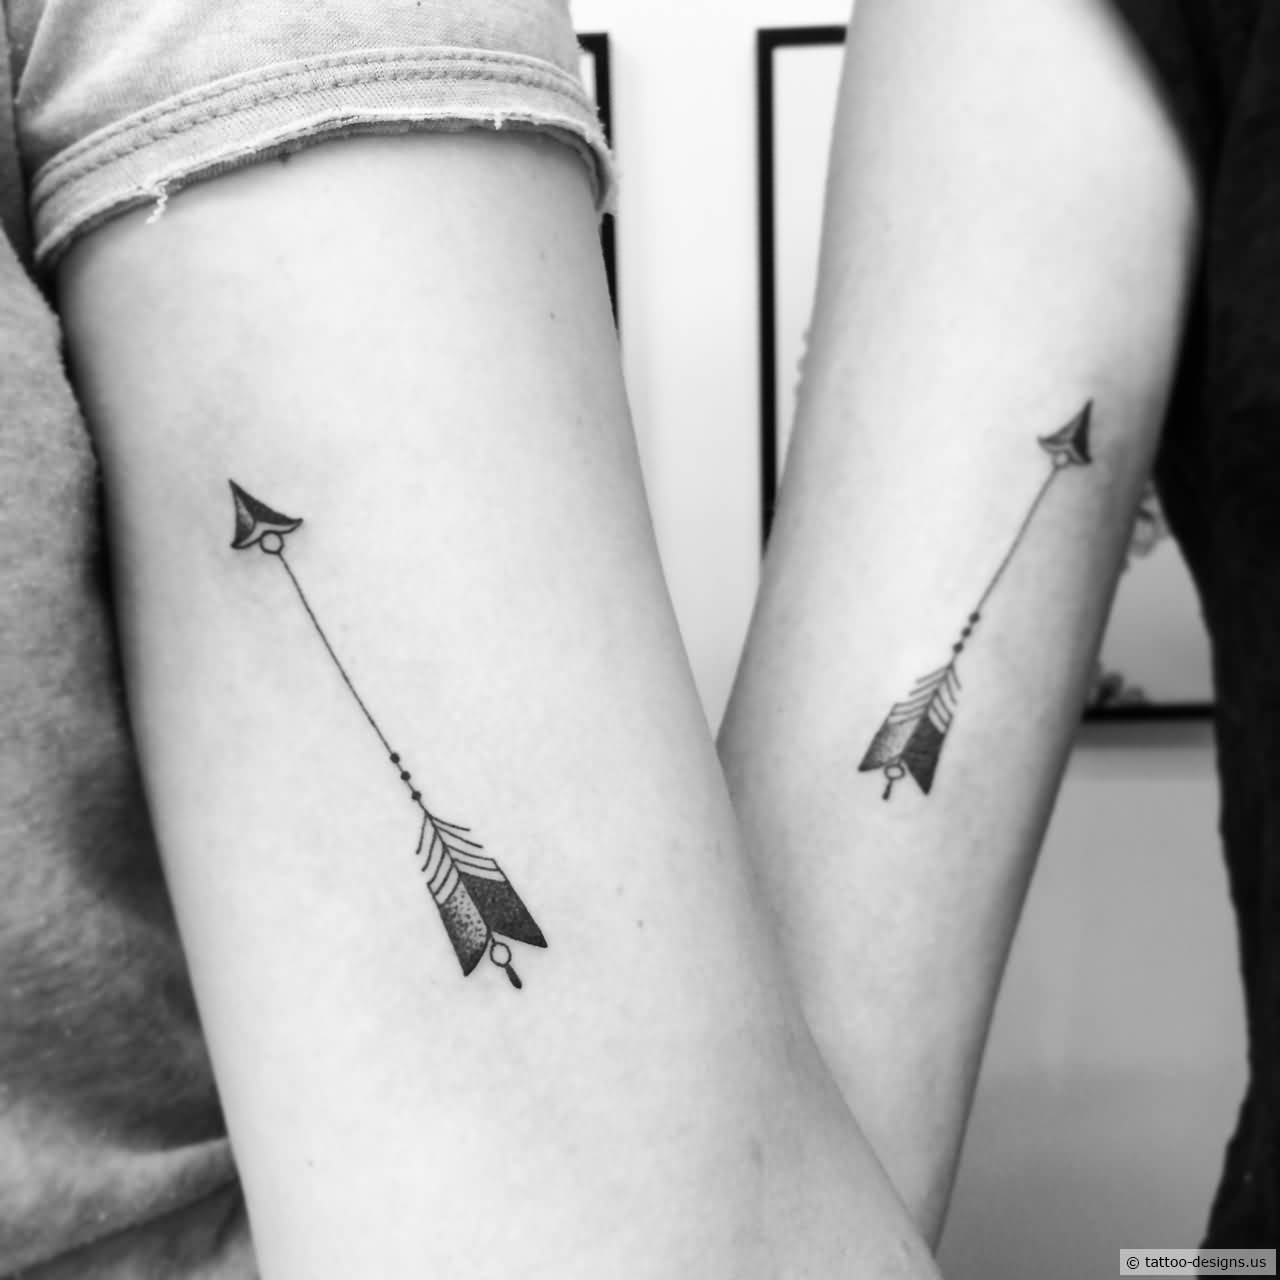 Matching Minimal Arrows Tattoos on Arm